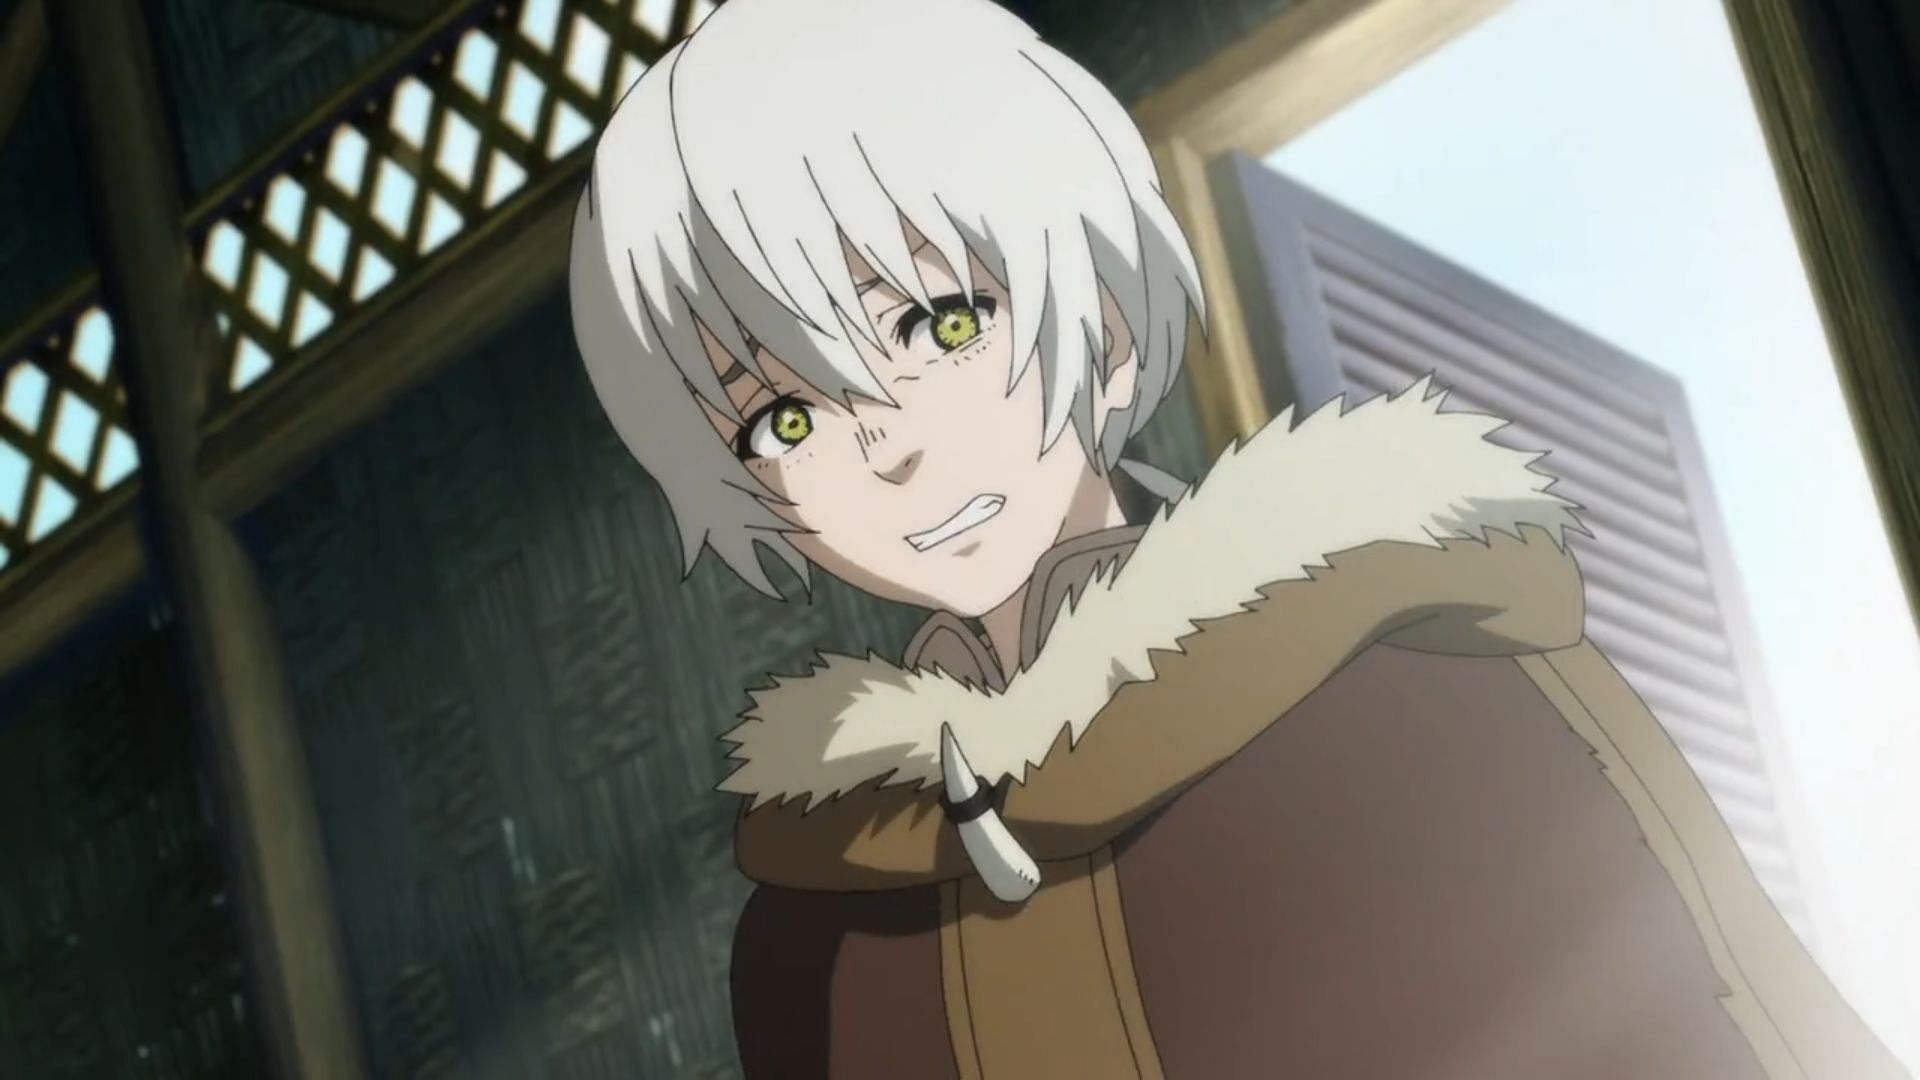 Fushi as seen in the anime (Image via Studio Drive)